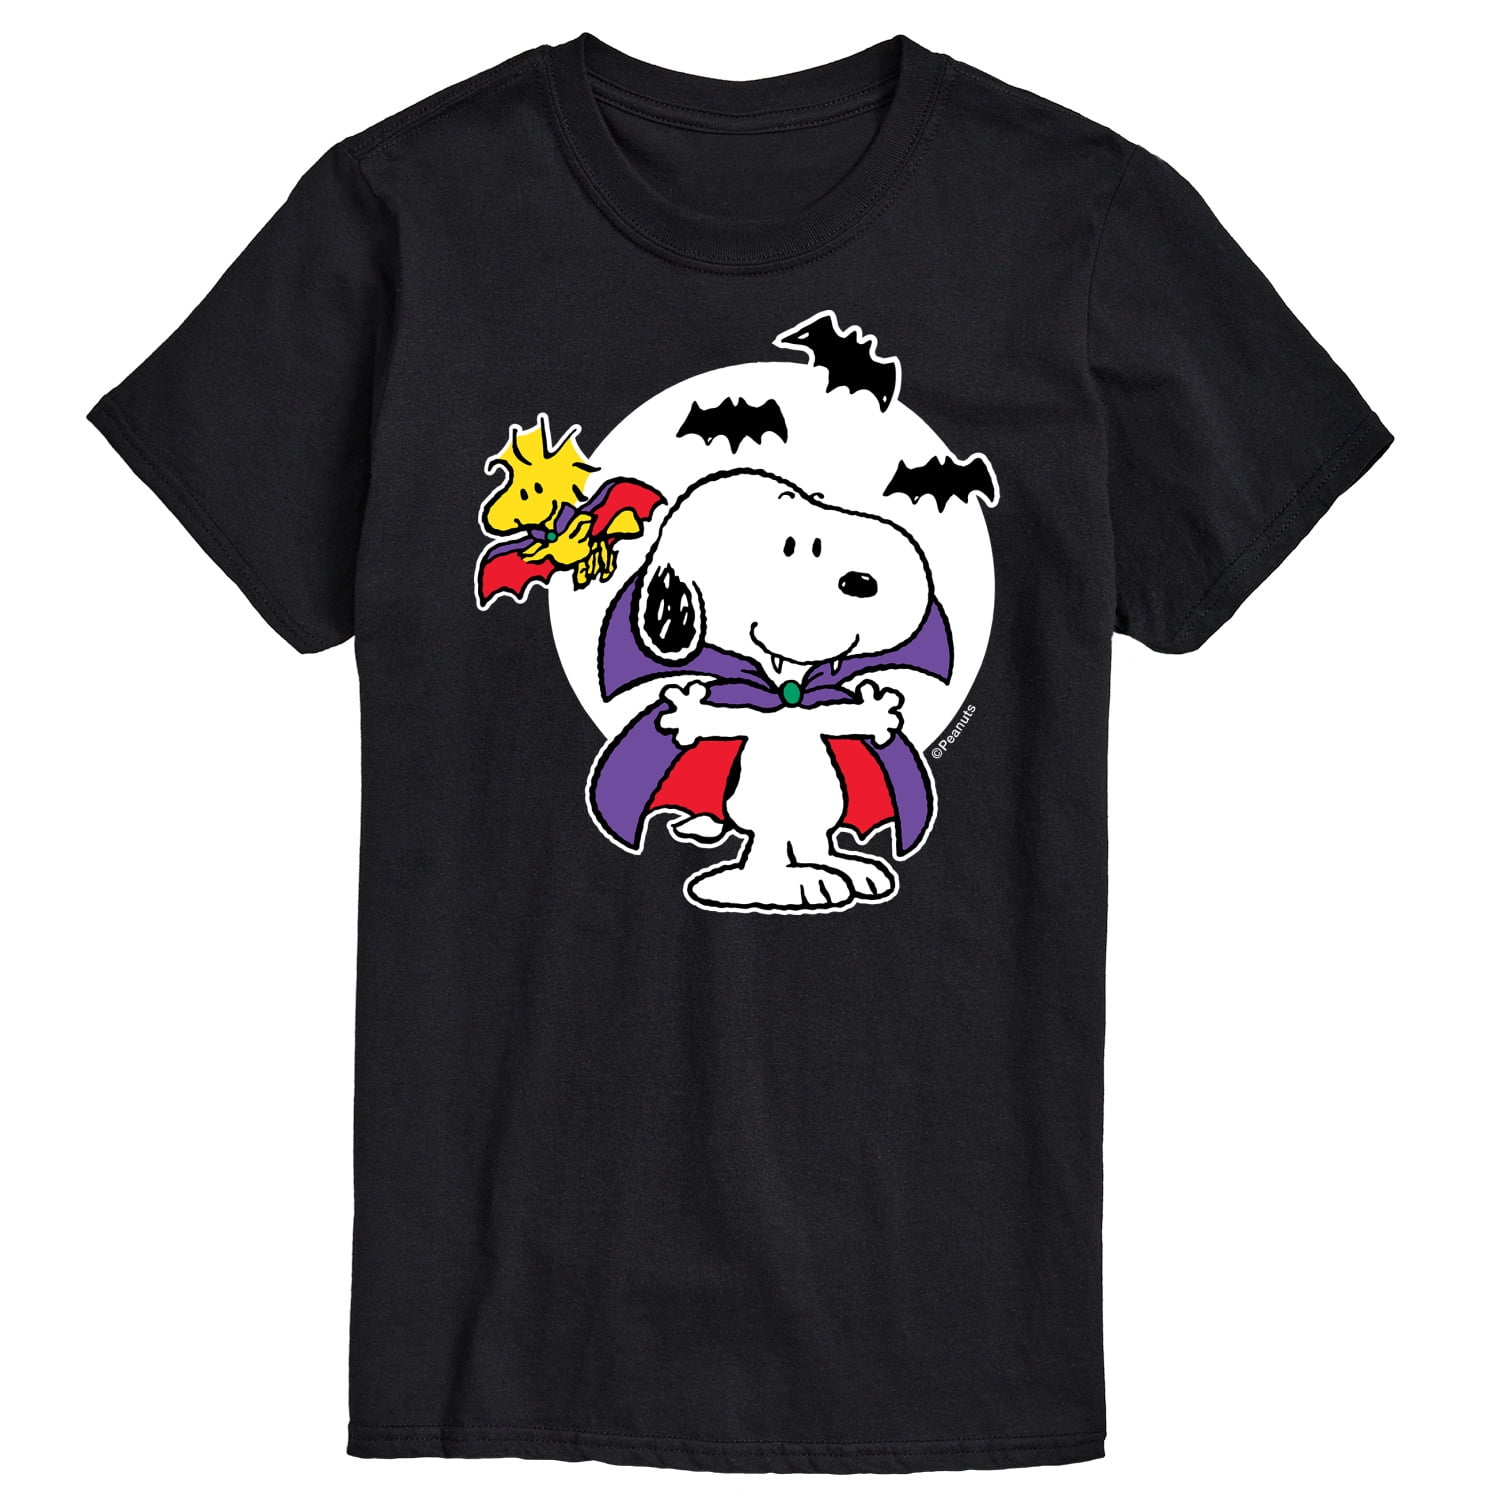 Peanuts - Snoopy Woodstock Vampire - Men's Short Sleeve Graphic T-Shirt ...